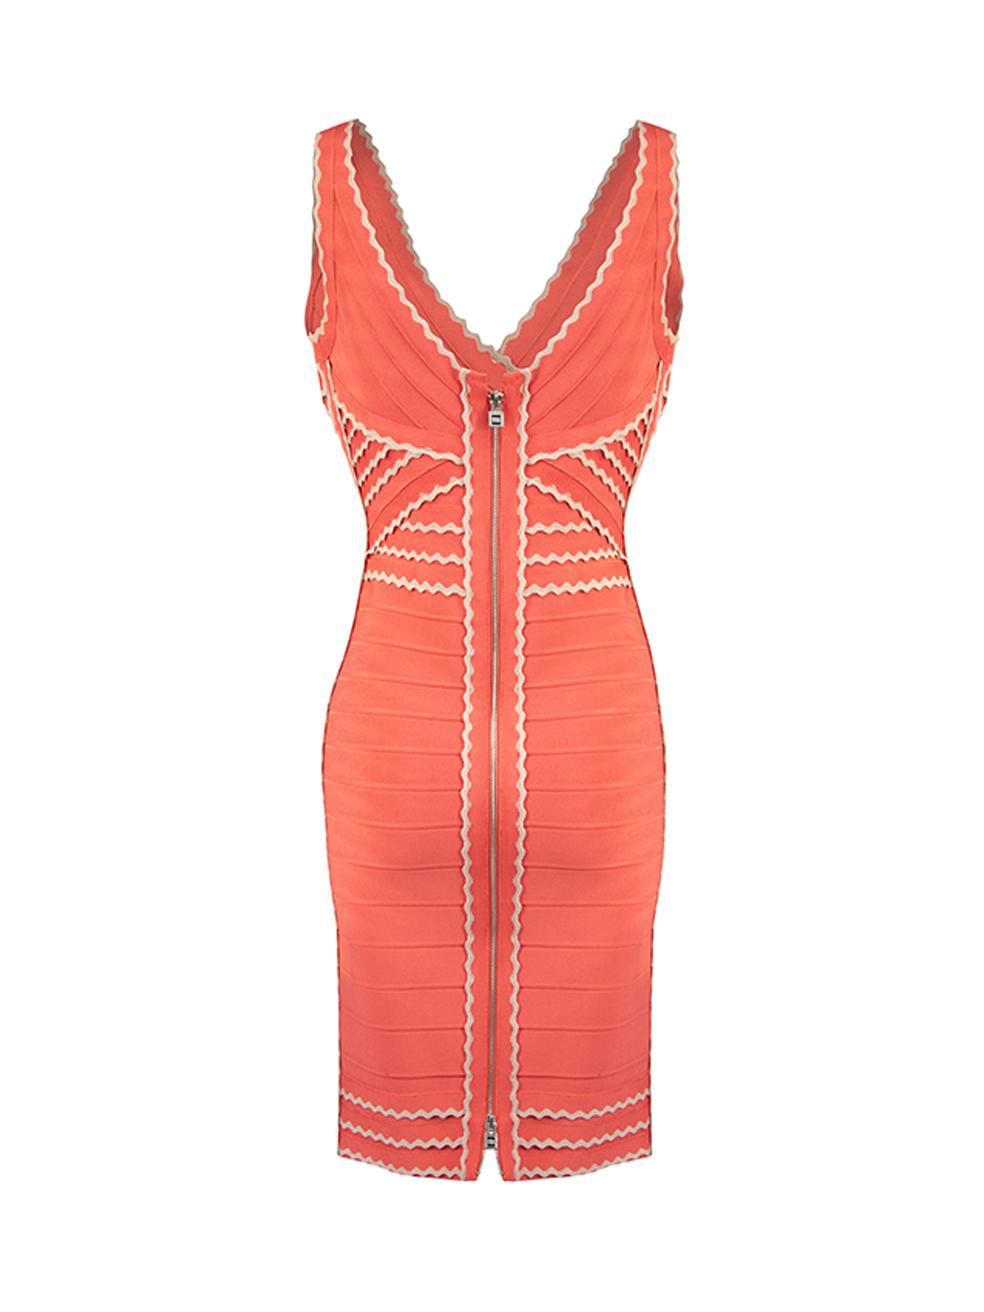 Orange Pre-Loved Herve Leger Women's Coral Sleeveless Bandage Dress